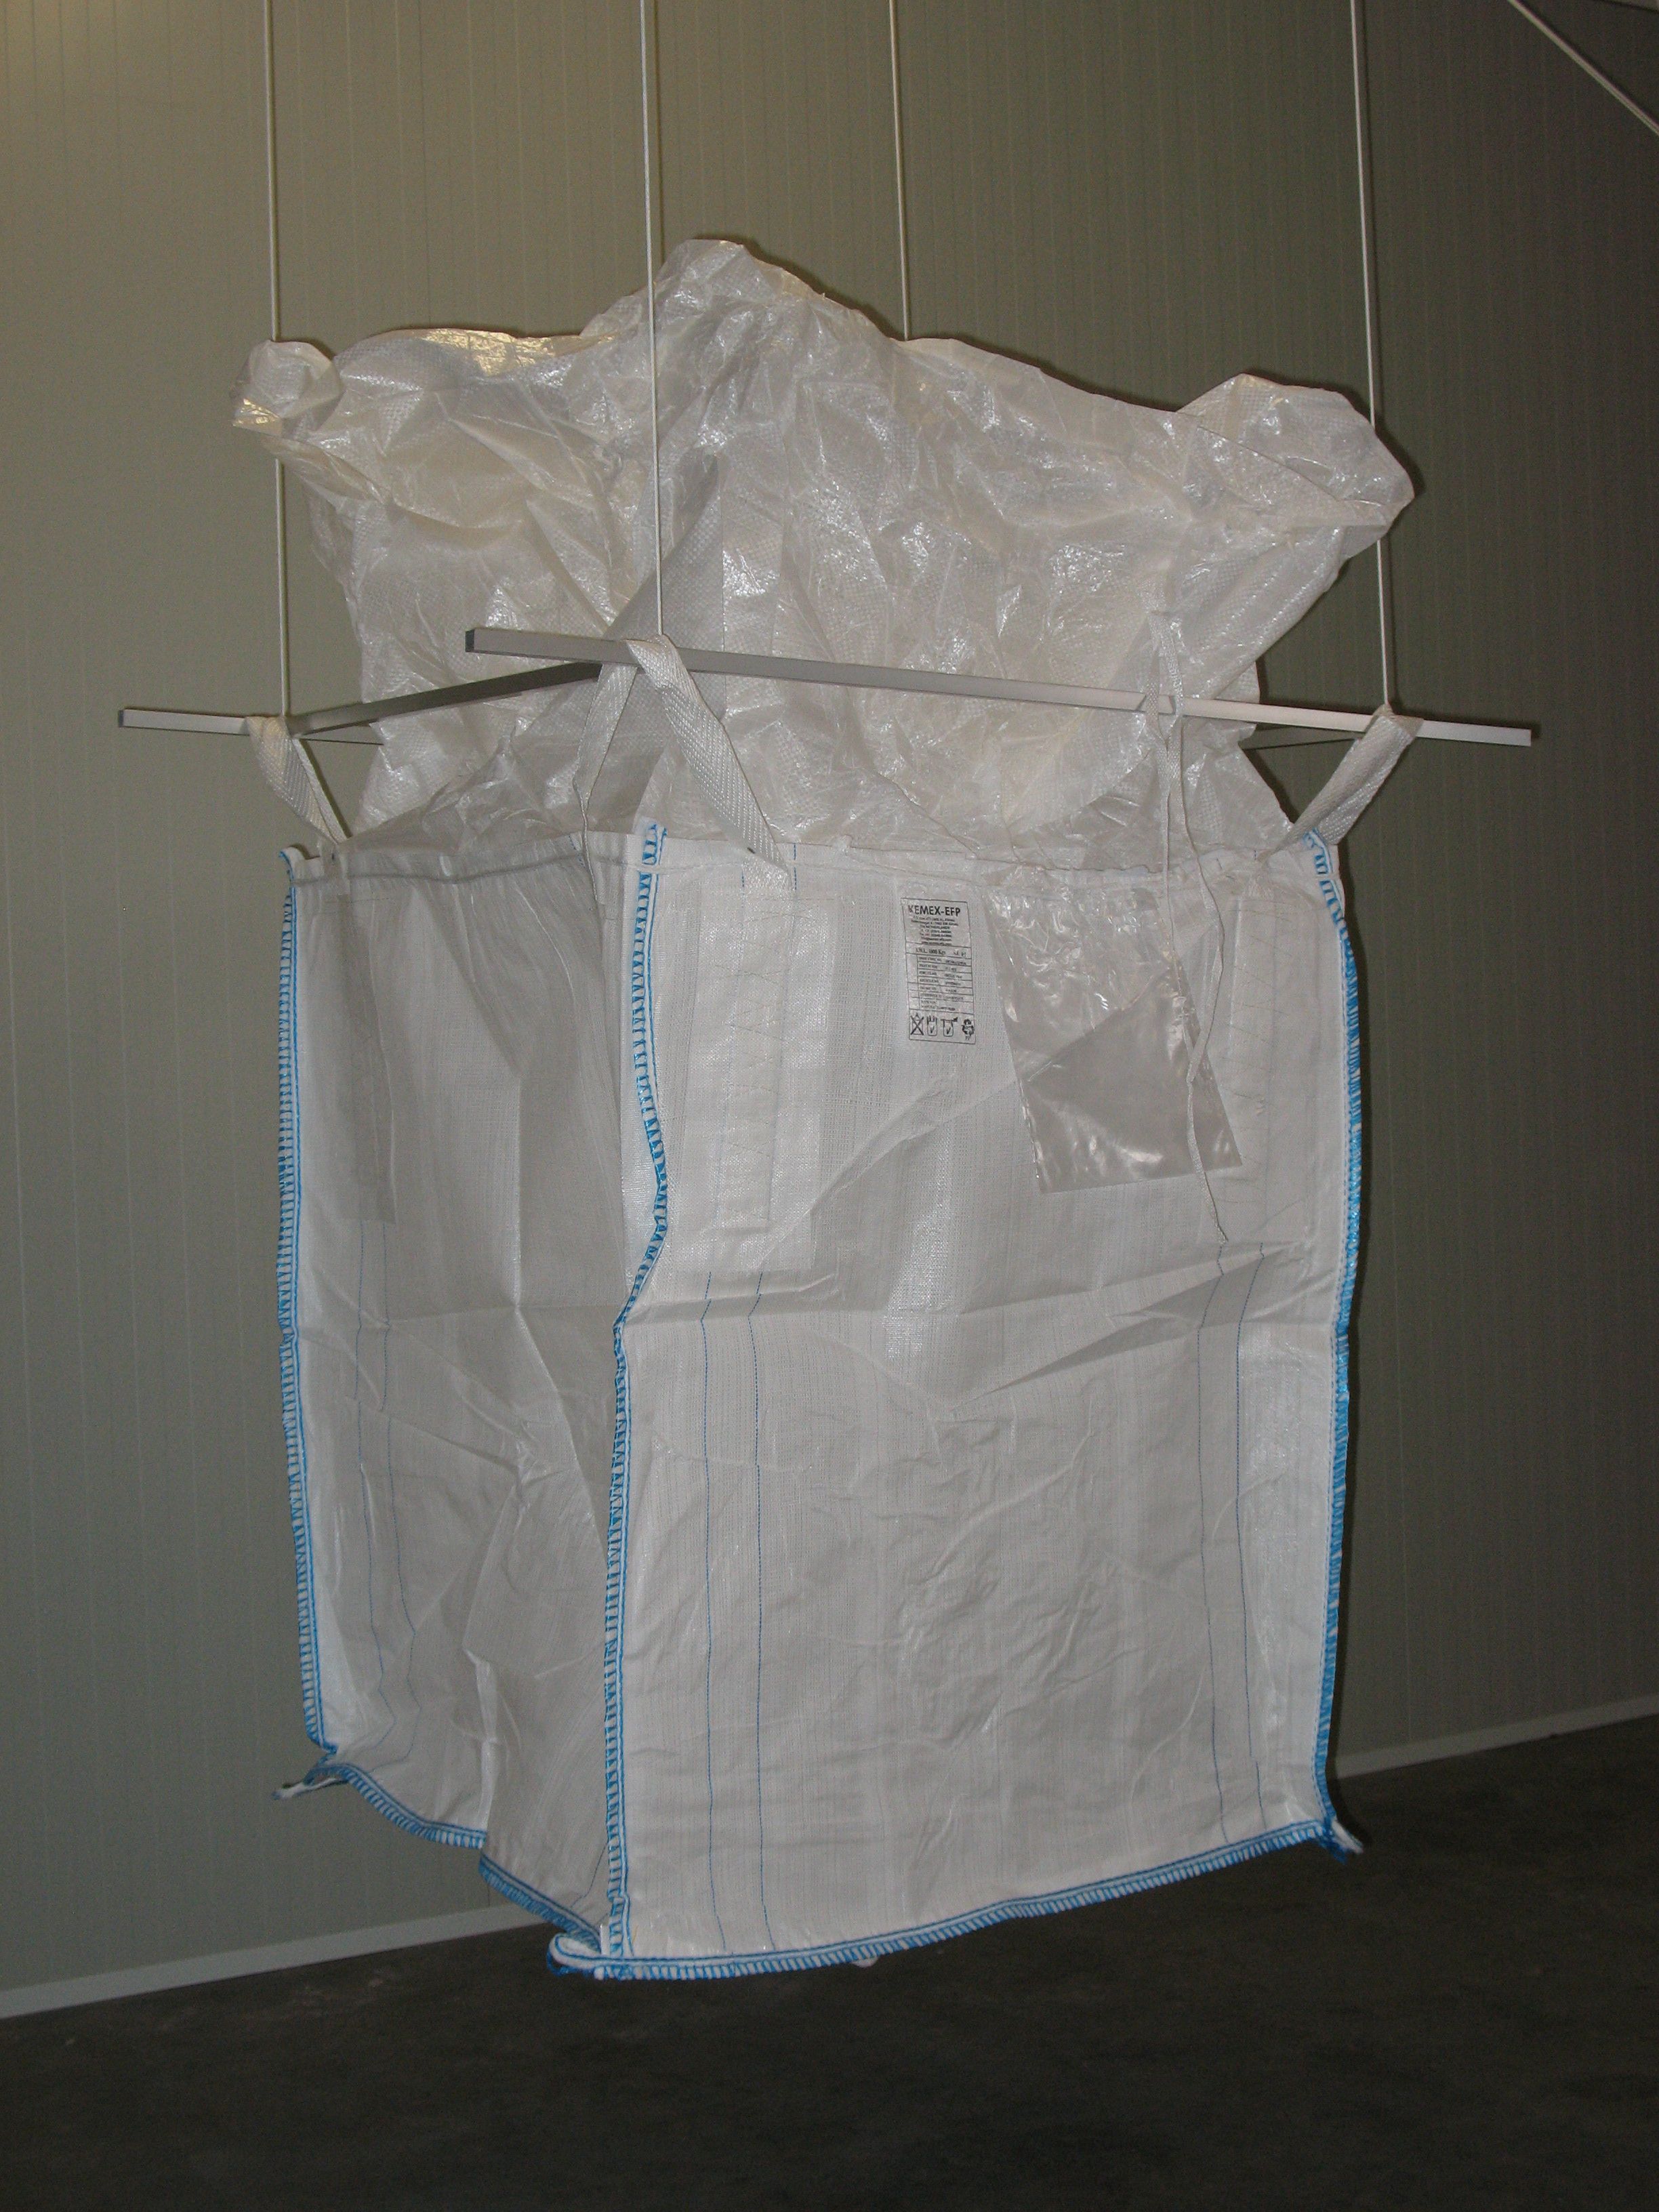 90 x 90 cm Bags BIGBAGS Säcke CONTAINER 500 kg 80 cm hoch * 2 Stück BIG BAG 